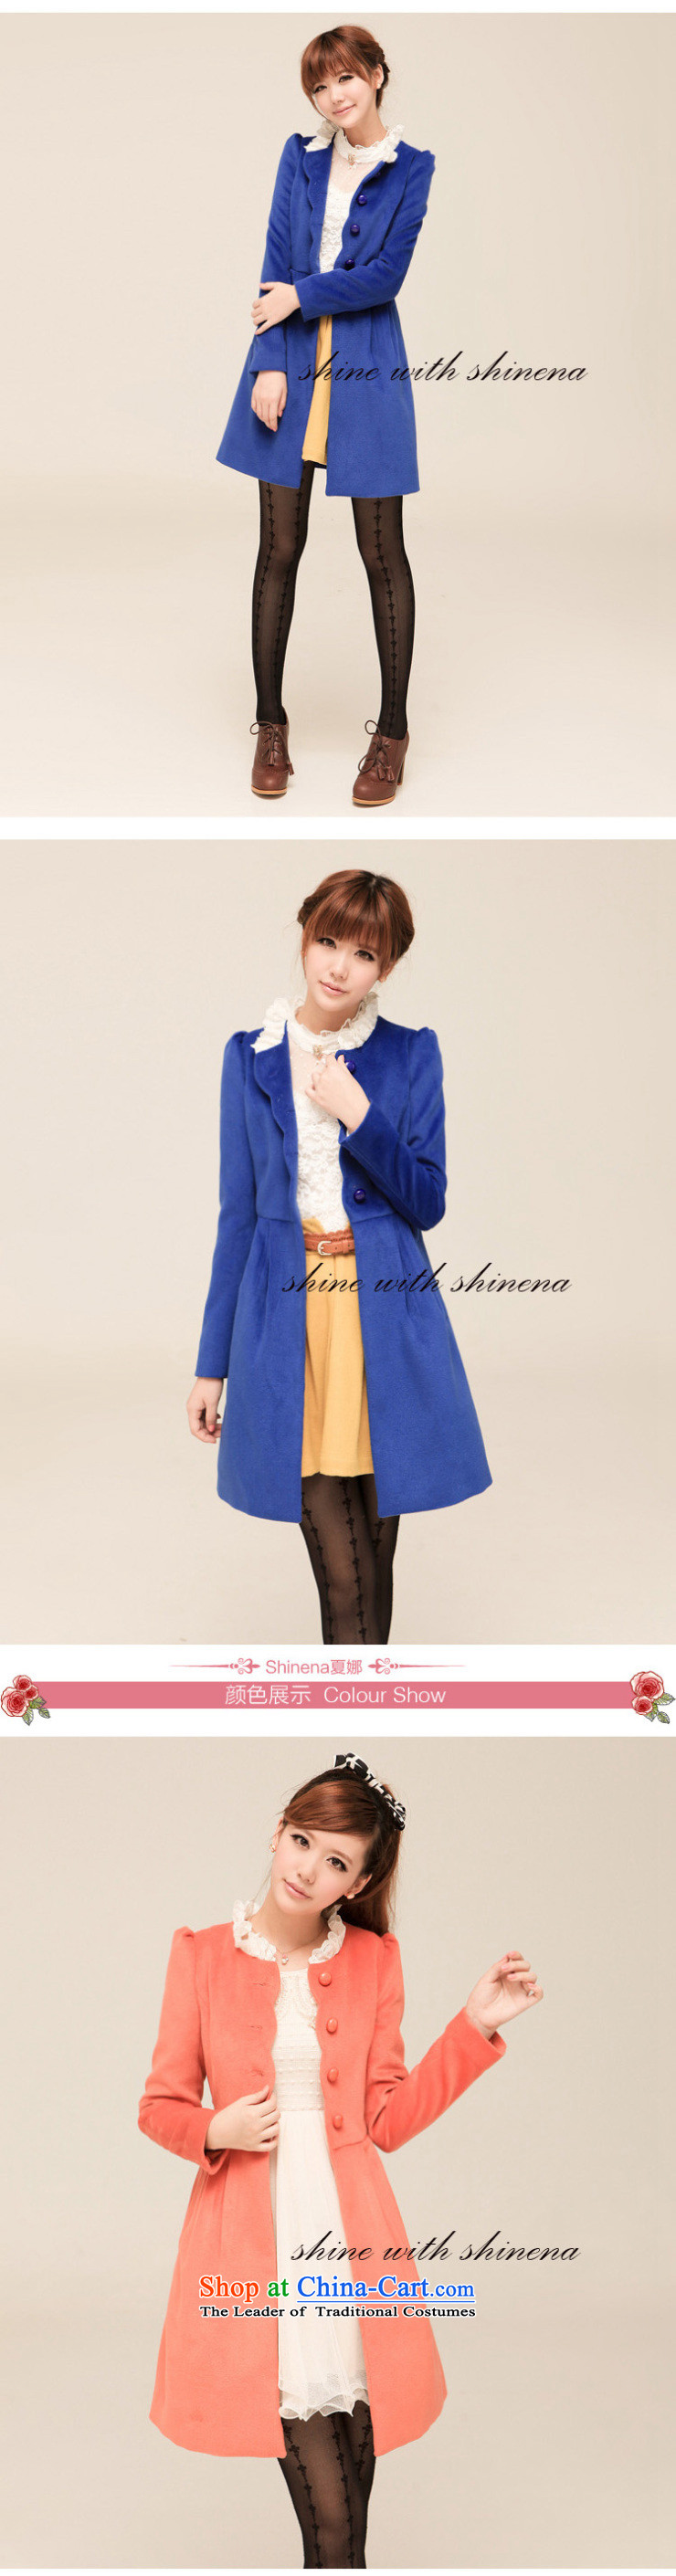 Shinena/ Ha-na 2013 autumn and winter new women's single row deduction of wool coat? 